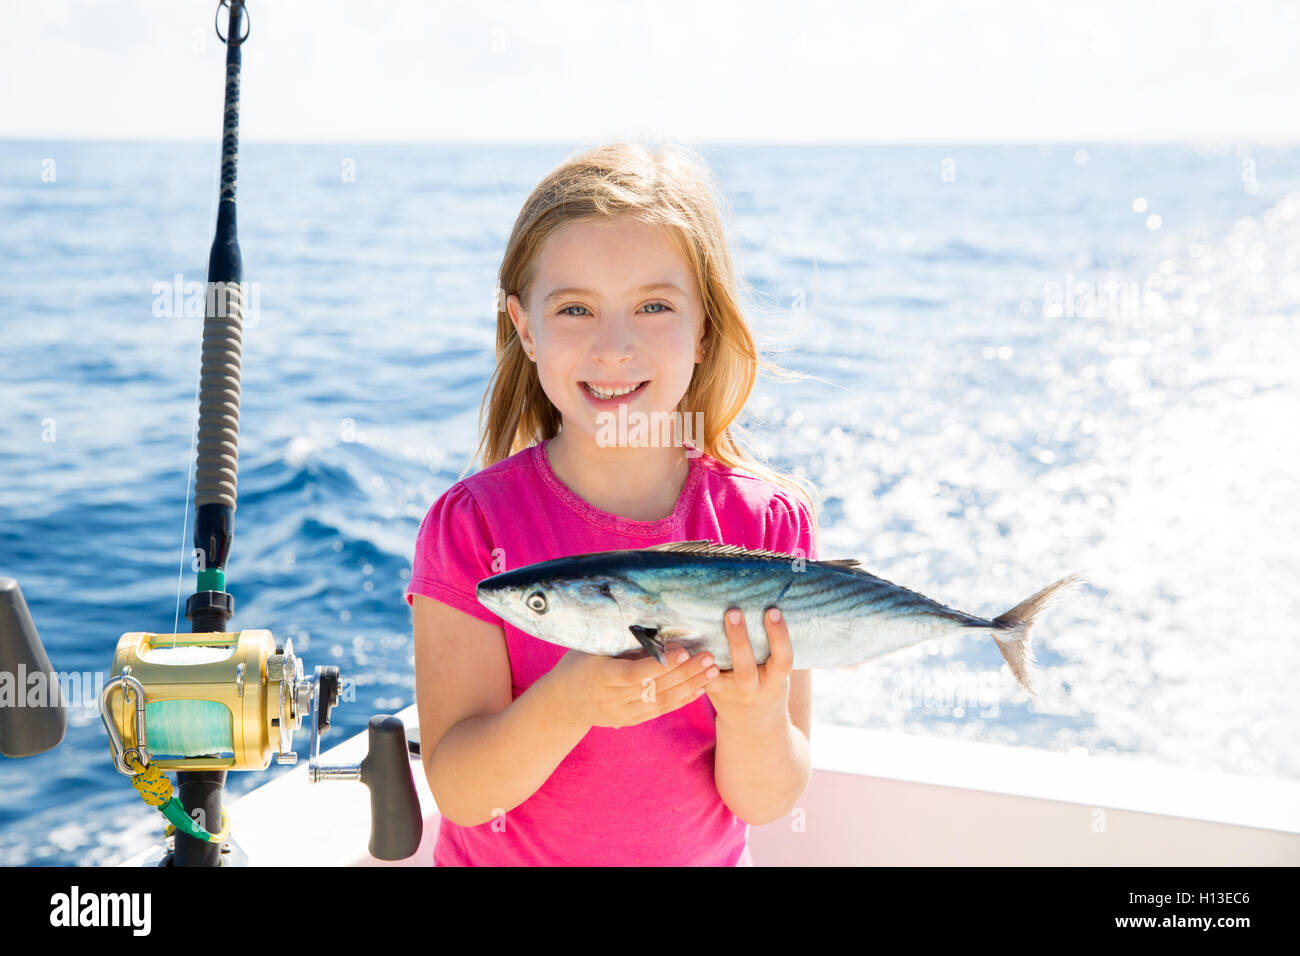 https://c8.alamy.com/comp/H13EC6/blond-kid-girl-fishing-tuna-bonito-sarda-fish-happy-catch-H13EC6.jpg